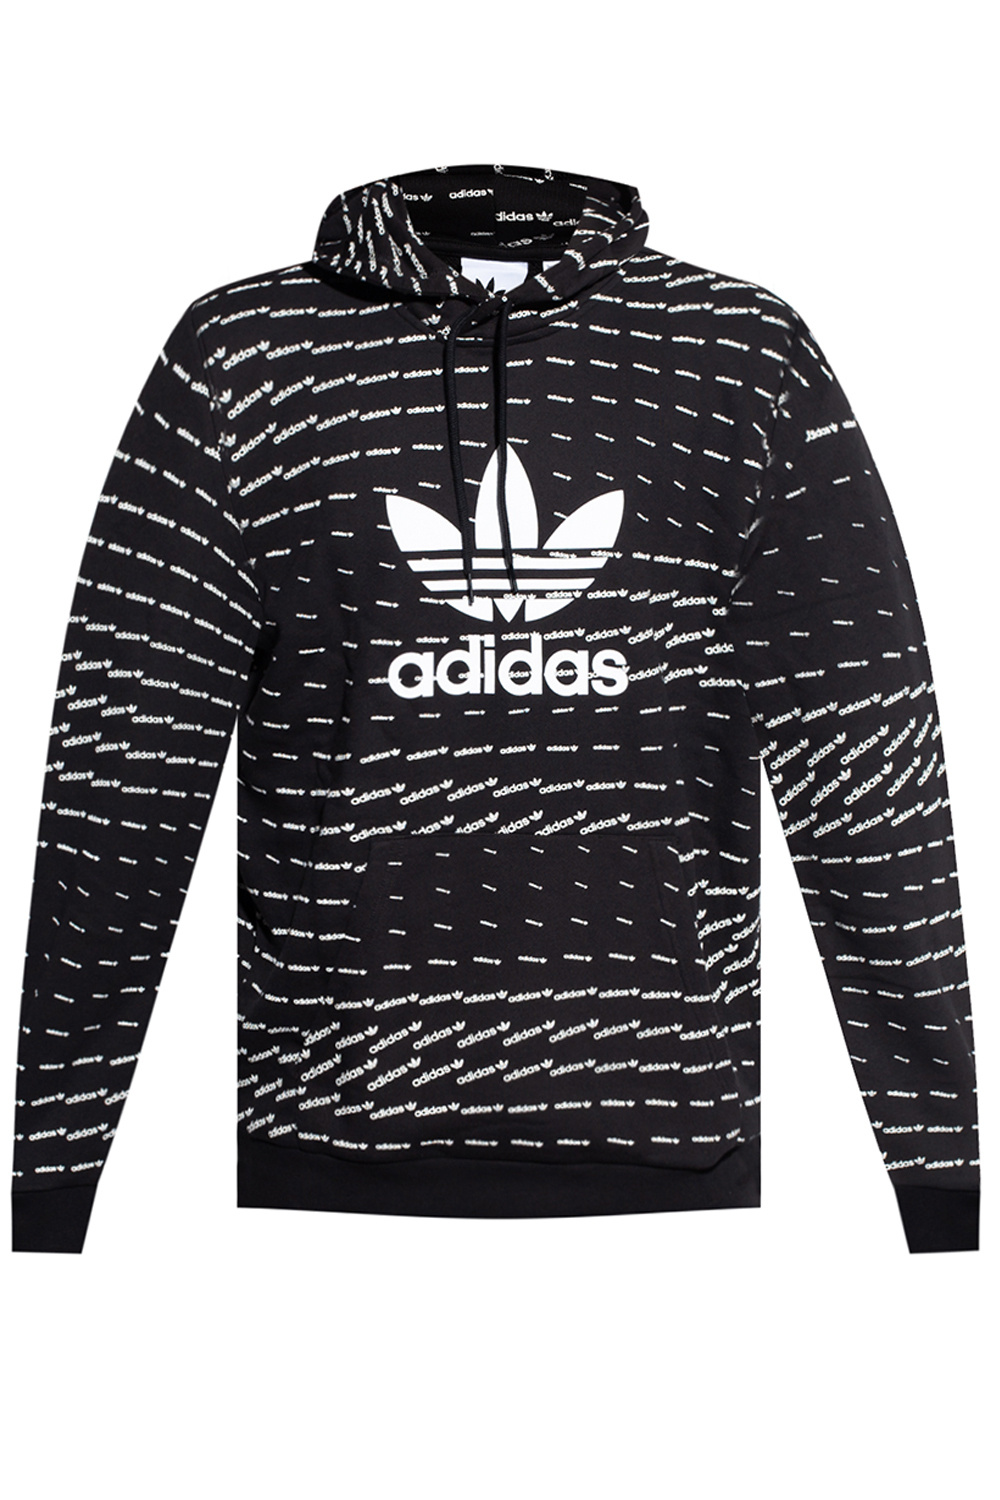 Men - ADIDAS Logo Adidas hoodie Running IetpShops 22 - Ulraboos Germany Originals GX5557 Yellow Black